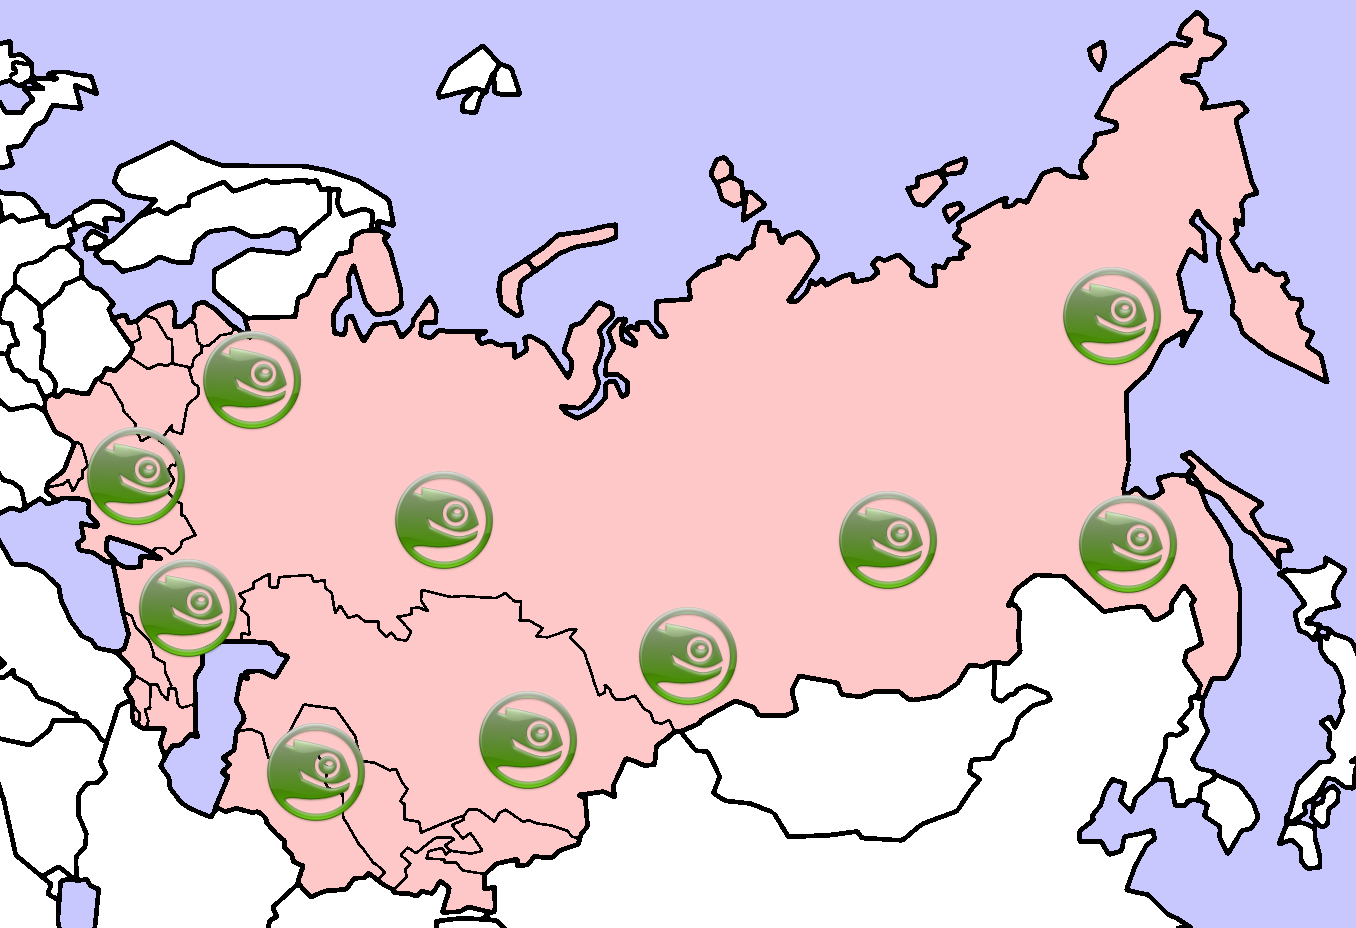 Russian Community Logo7.png